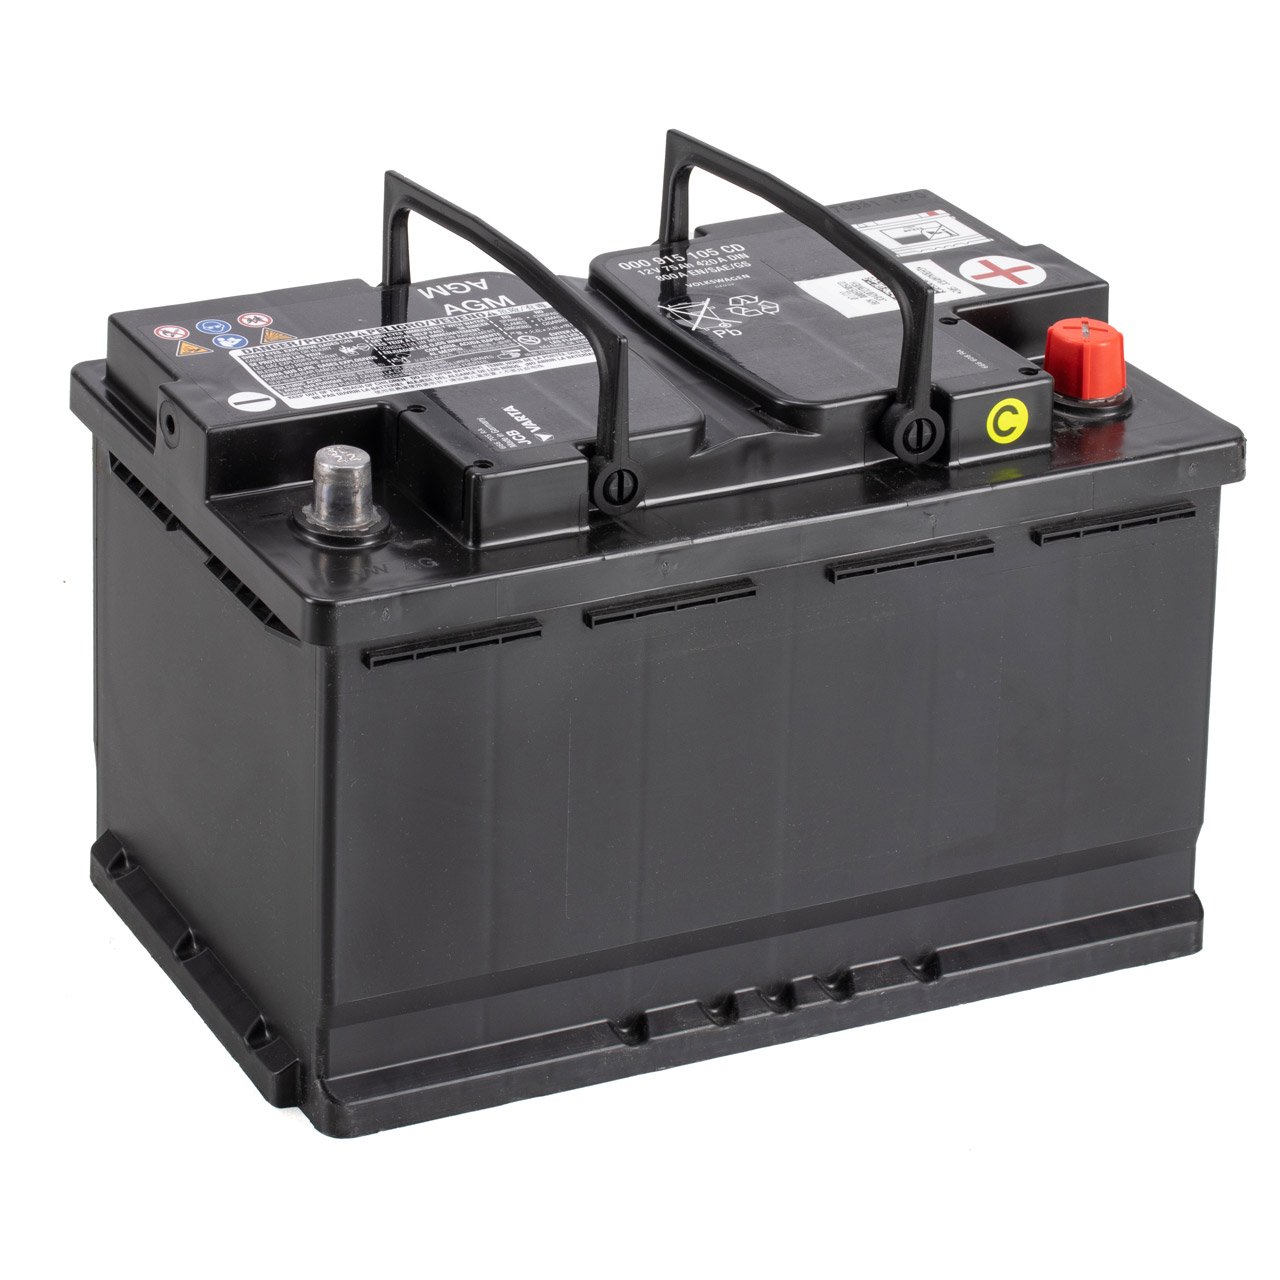 ORIGINAL VW Autobatterie Batterie Starterbatterie 12V 75Ah 420/800A 000915105CD